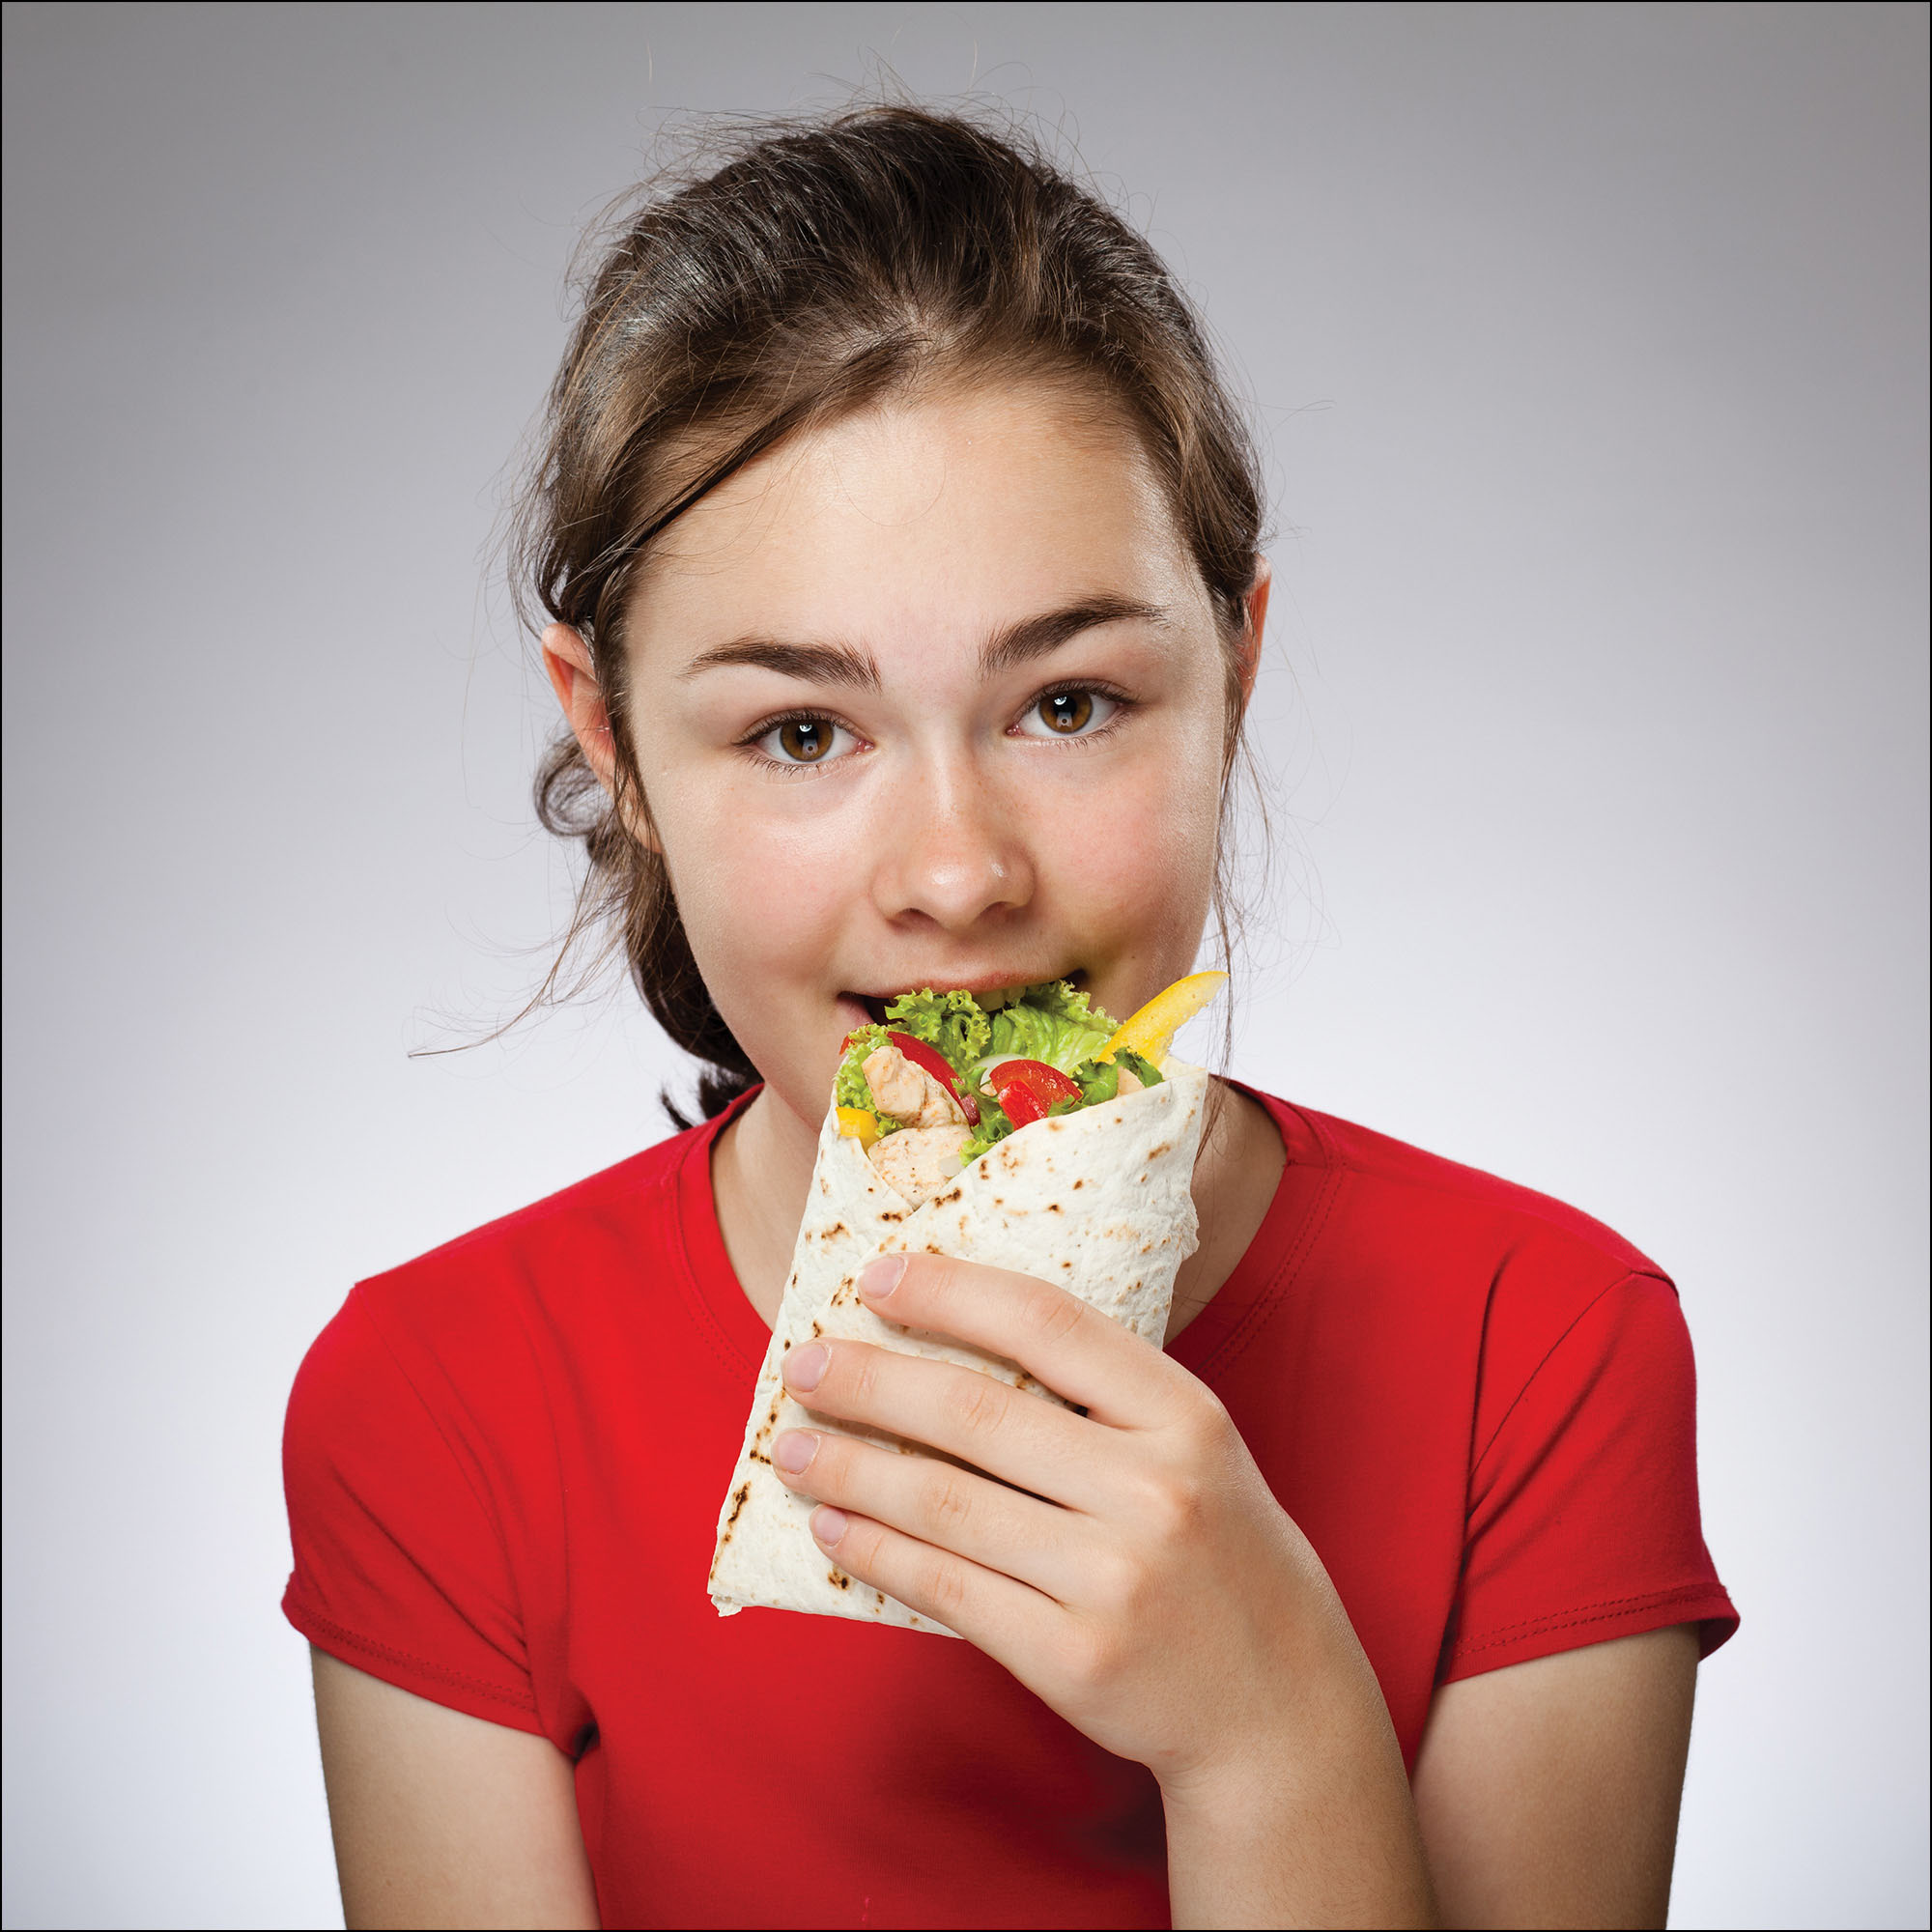 Photo of a girl eating a burrito